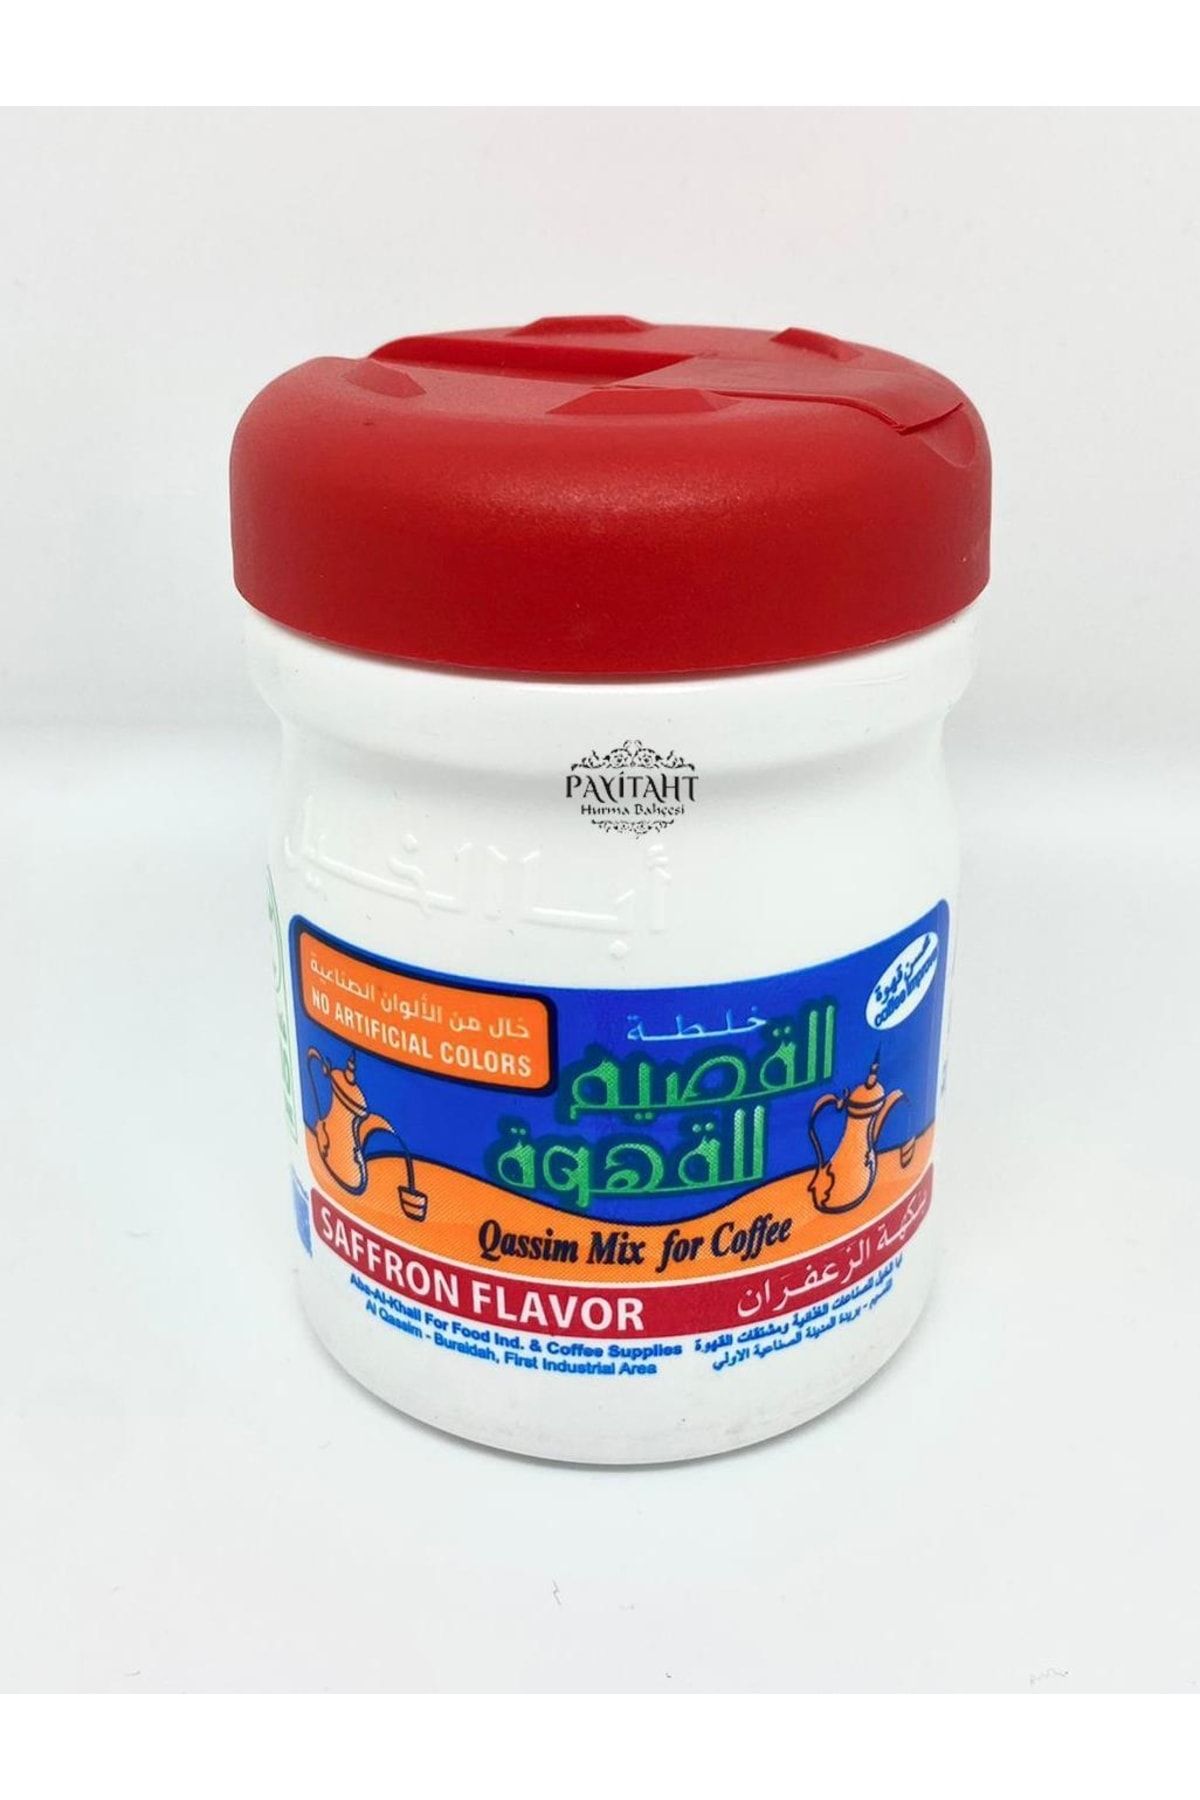 payitaht hurma Qassim Mix Coffee Original Arabic - Arap Kahvesi - Saffron Flavor 125 gr